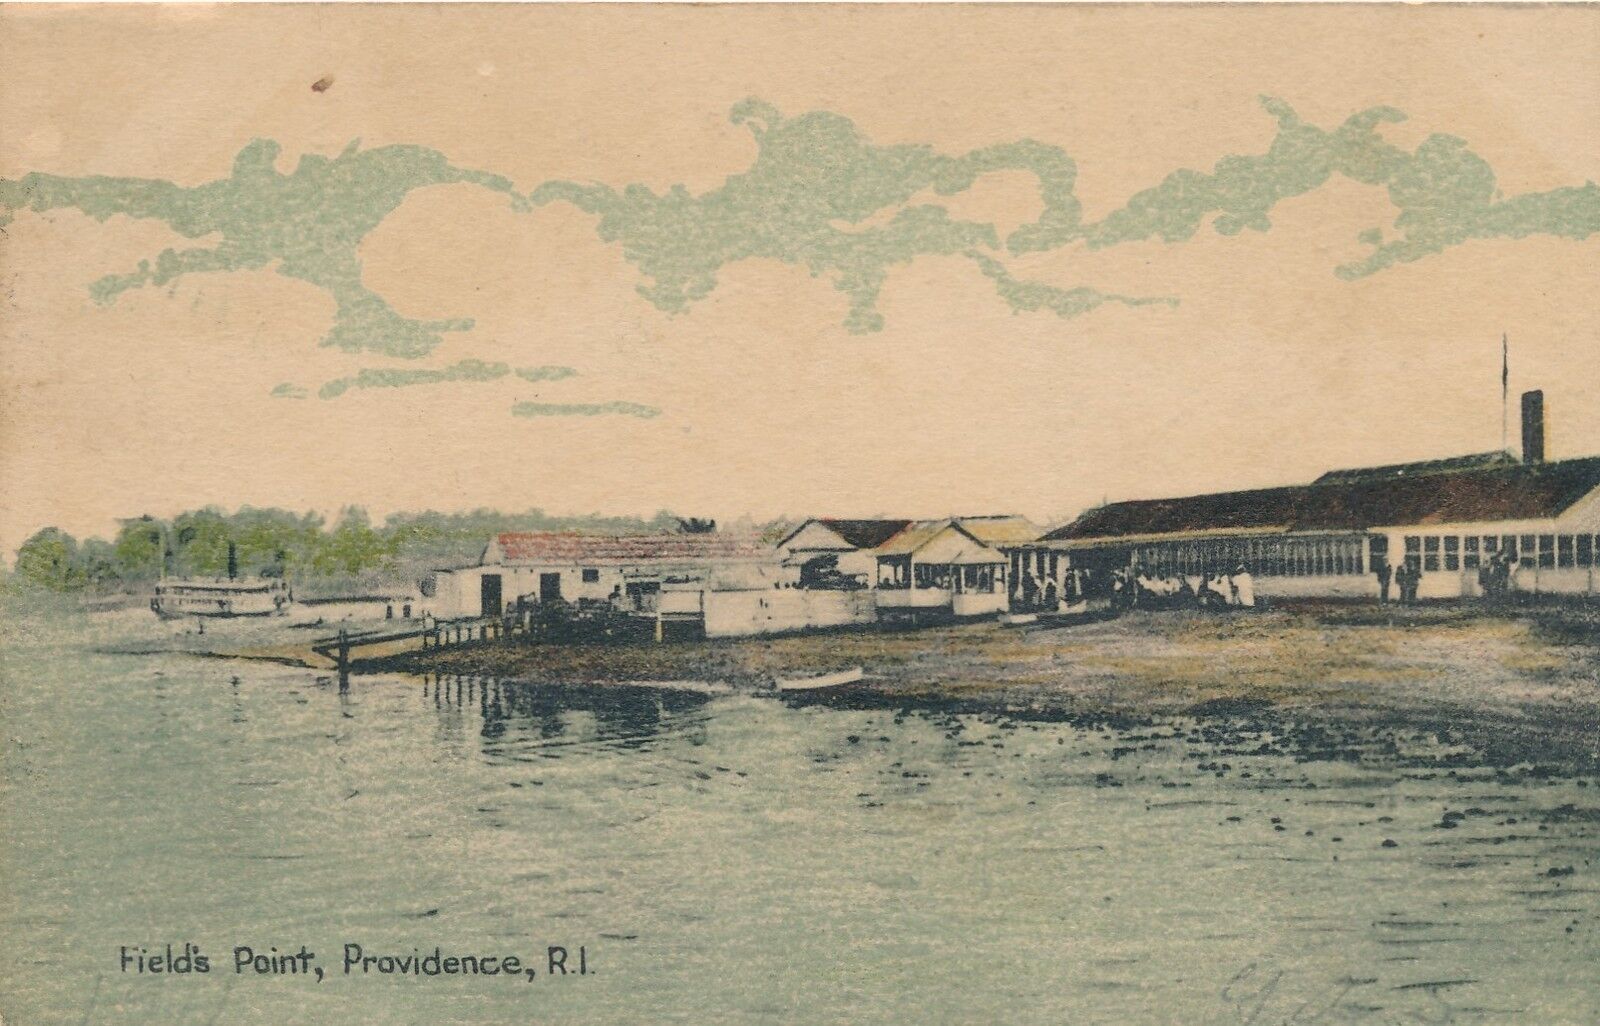 PROVIDENCE RI – Field's Point - 1911